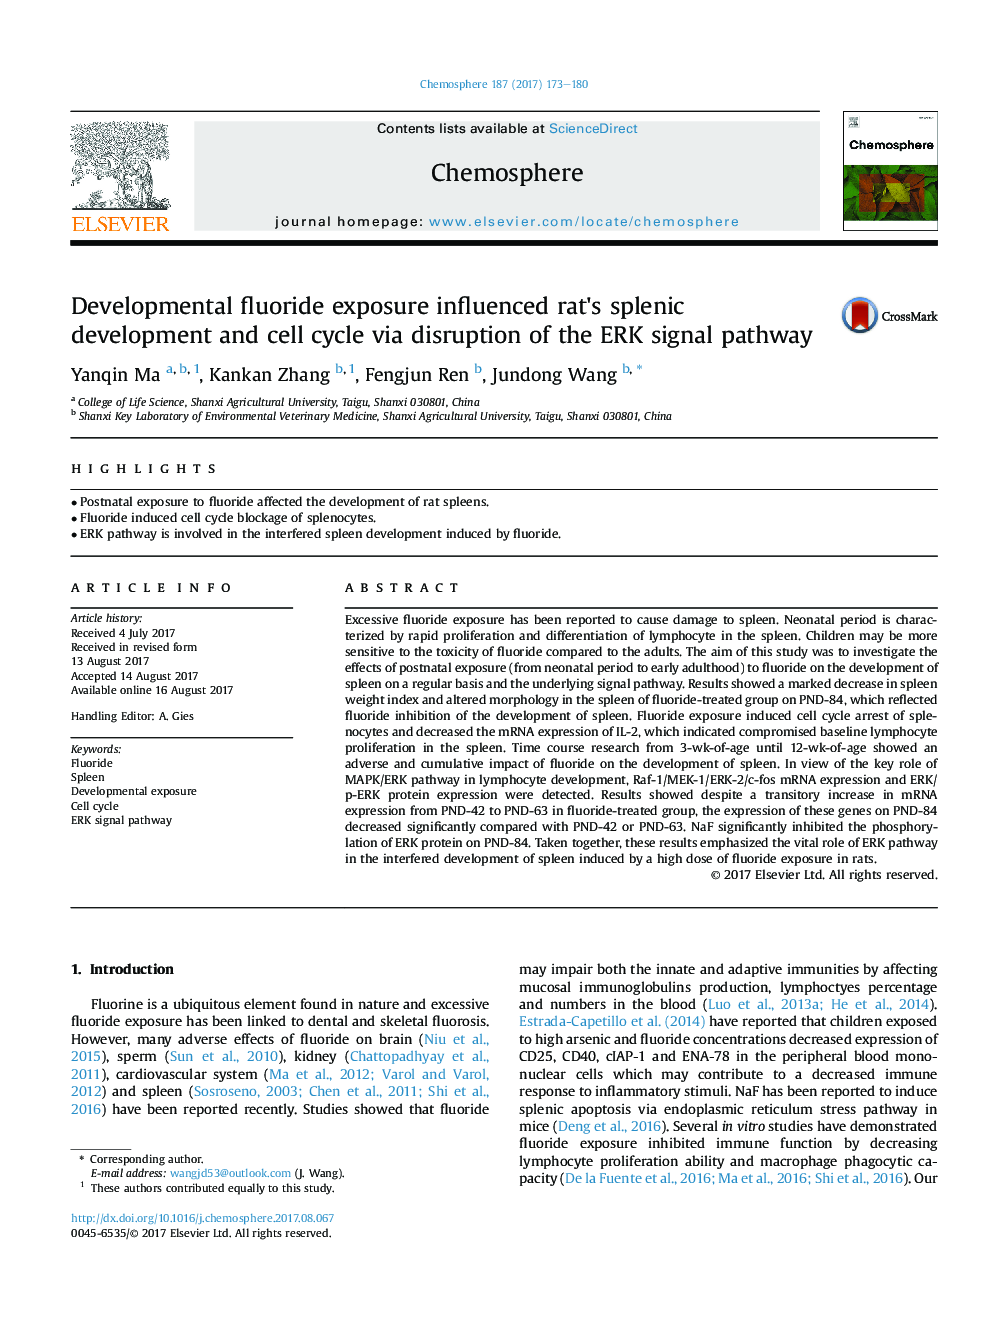 Developmental fluoride exposure influenced rat's splenic development and cell cycle via disruption of the ERK signal pathway